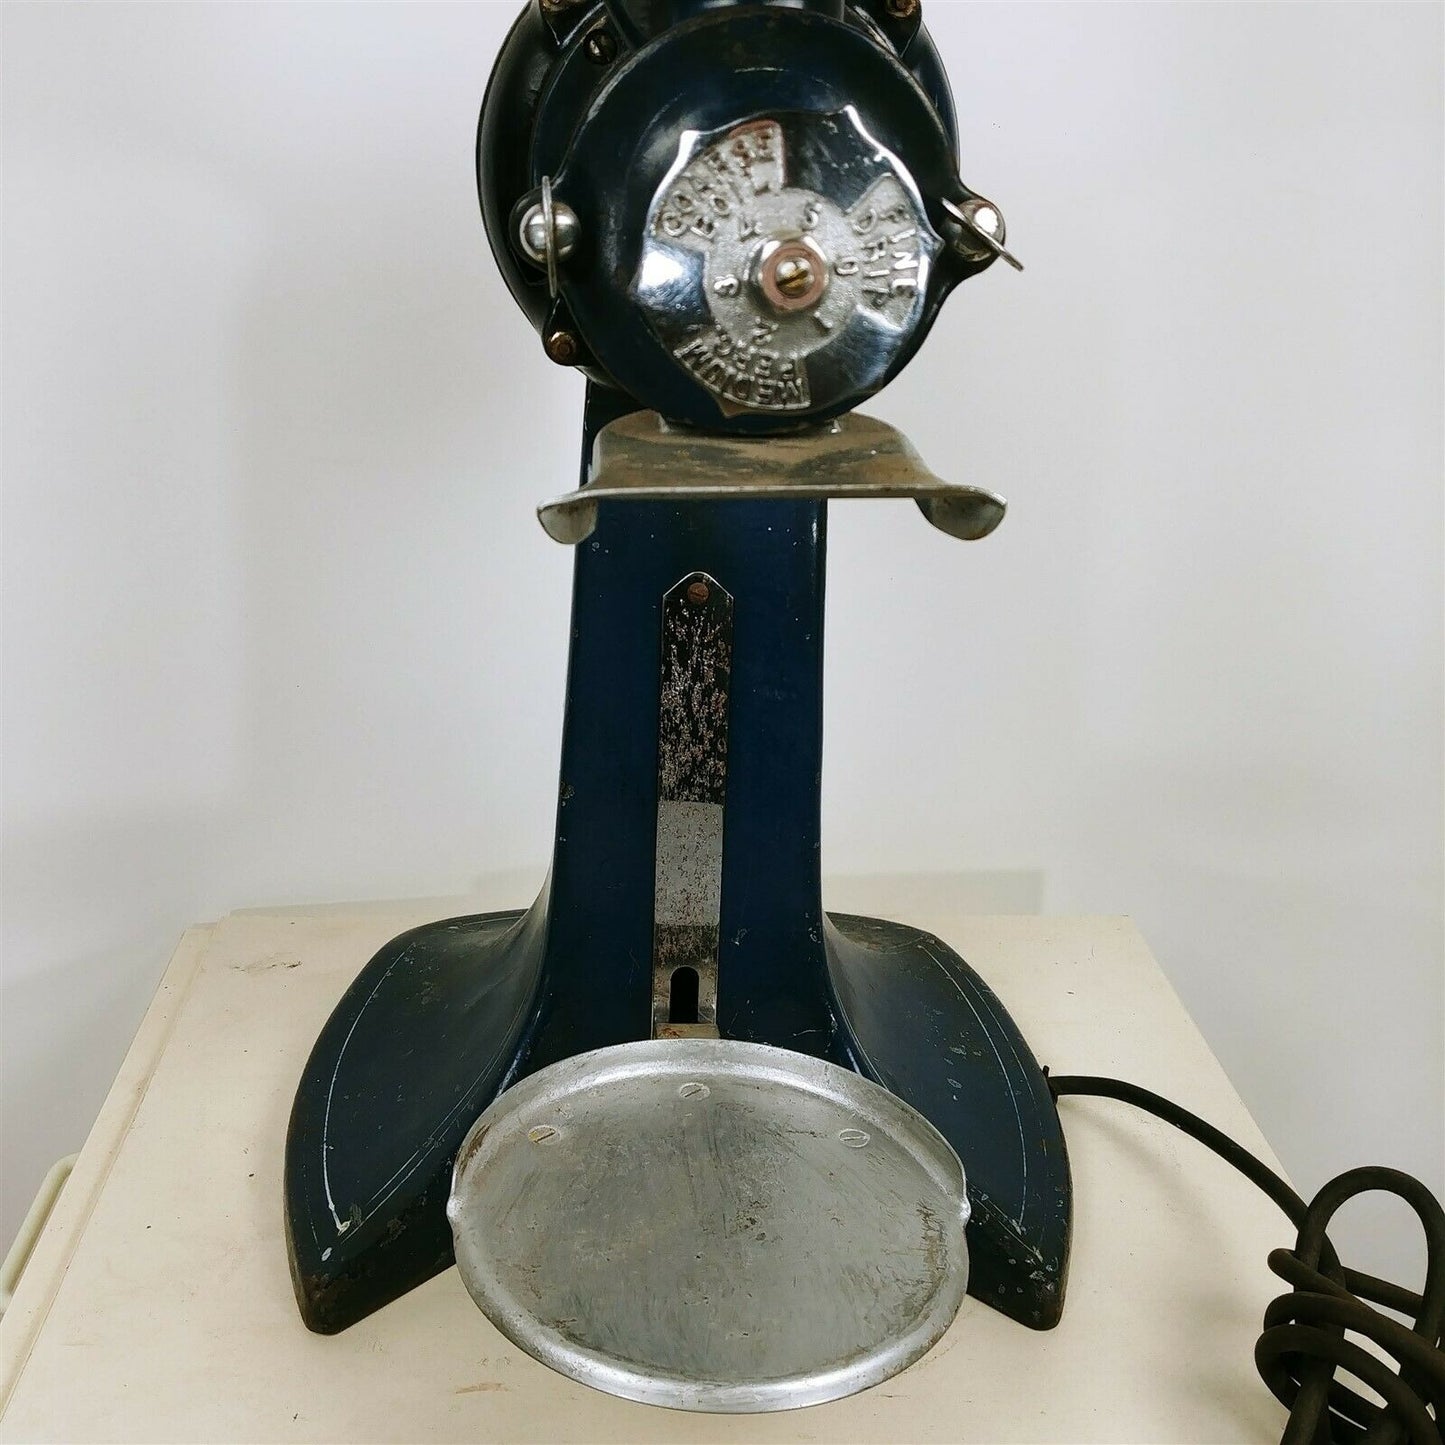 Antique 1920's American Duplex Electric Coffee Cutter Grinder Cast Iron Aluminum